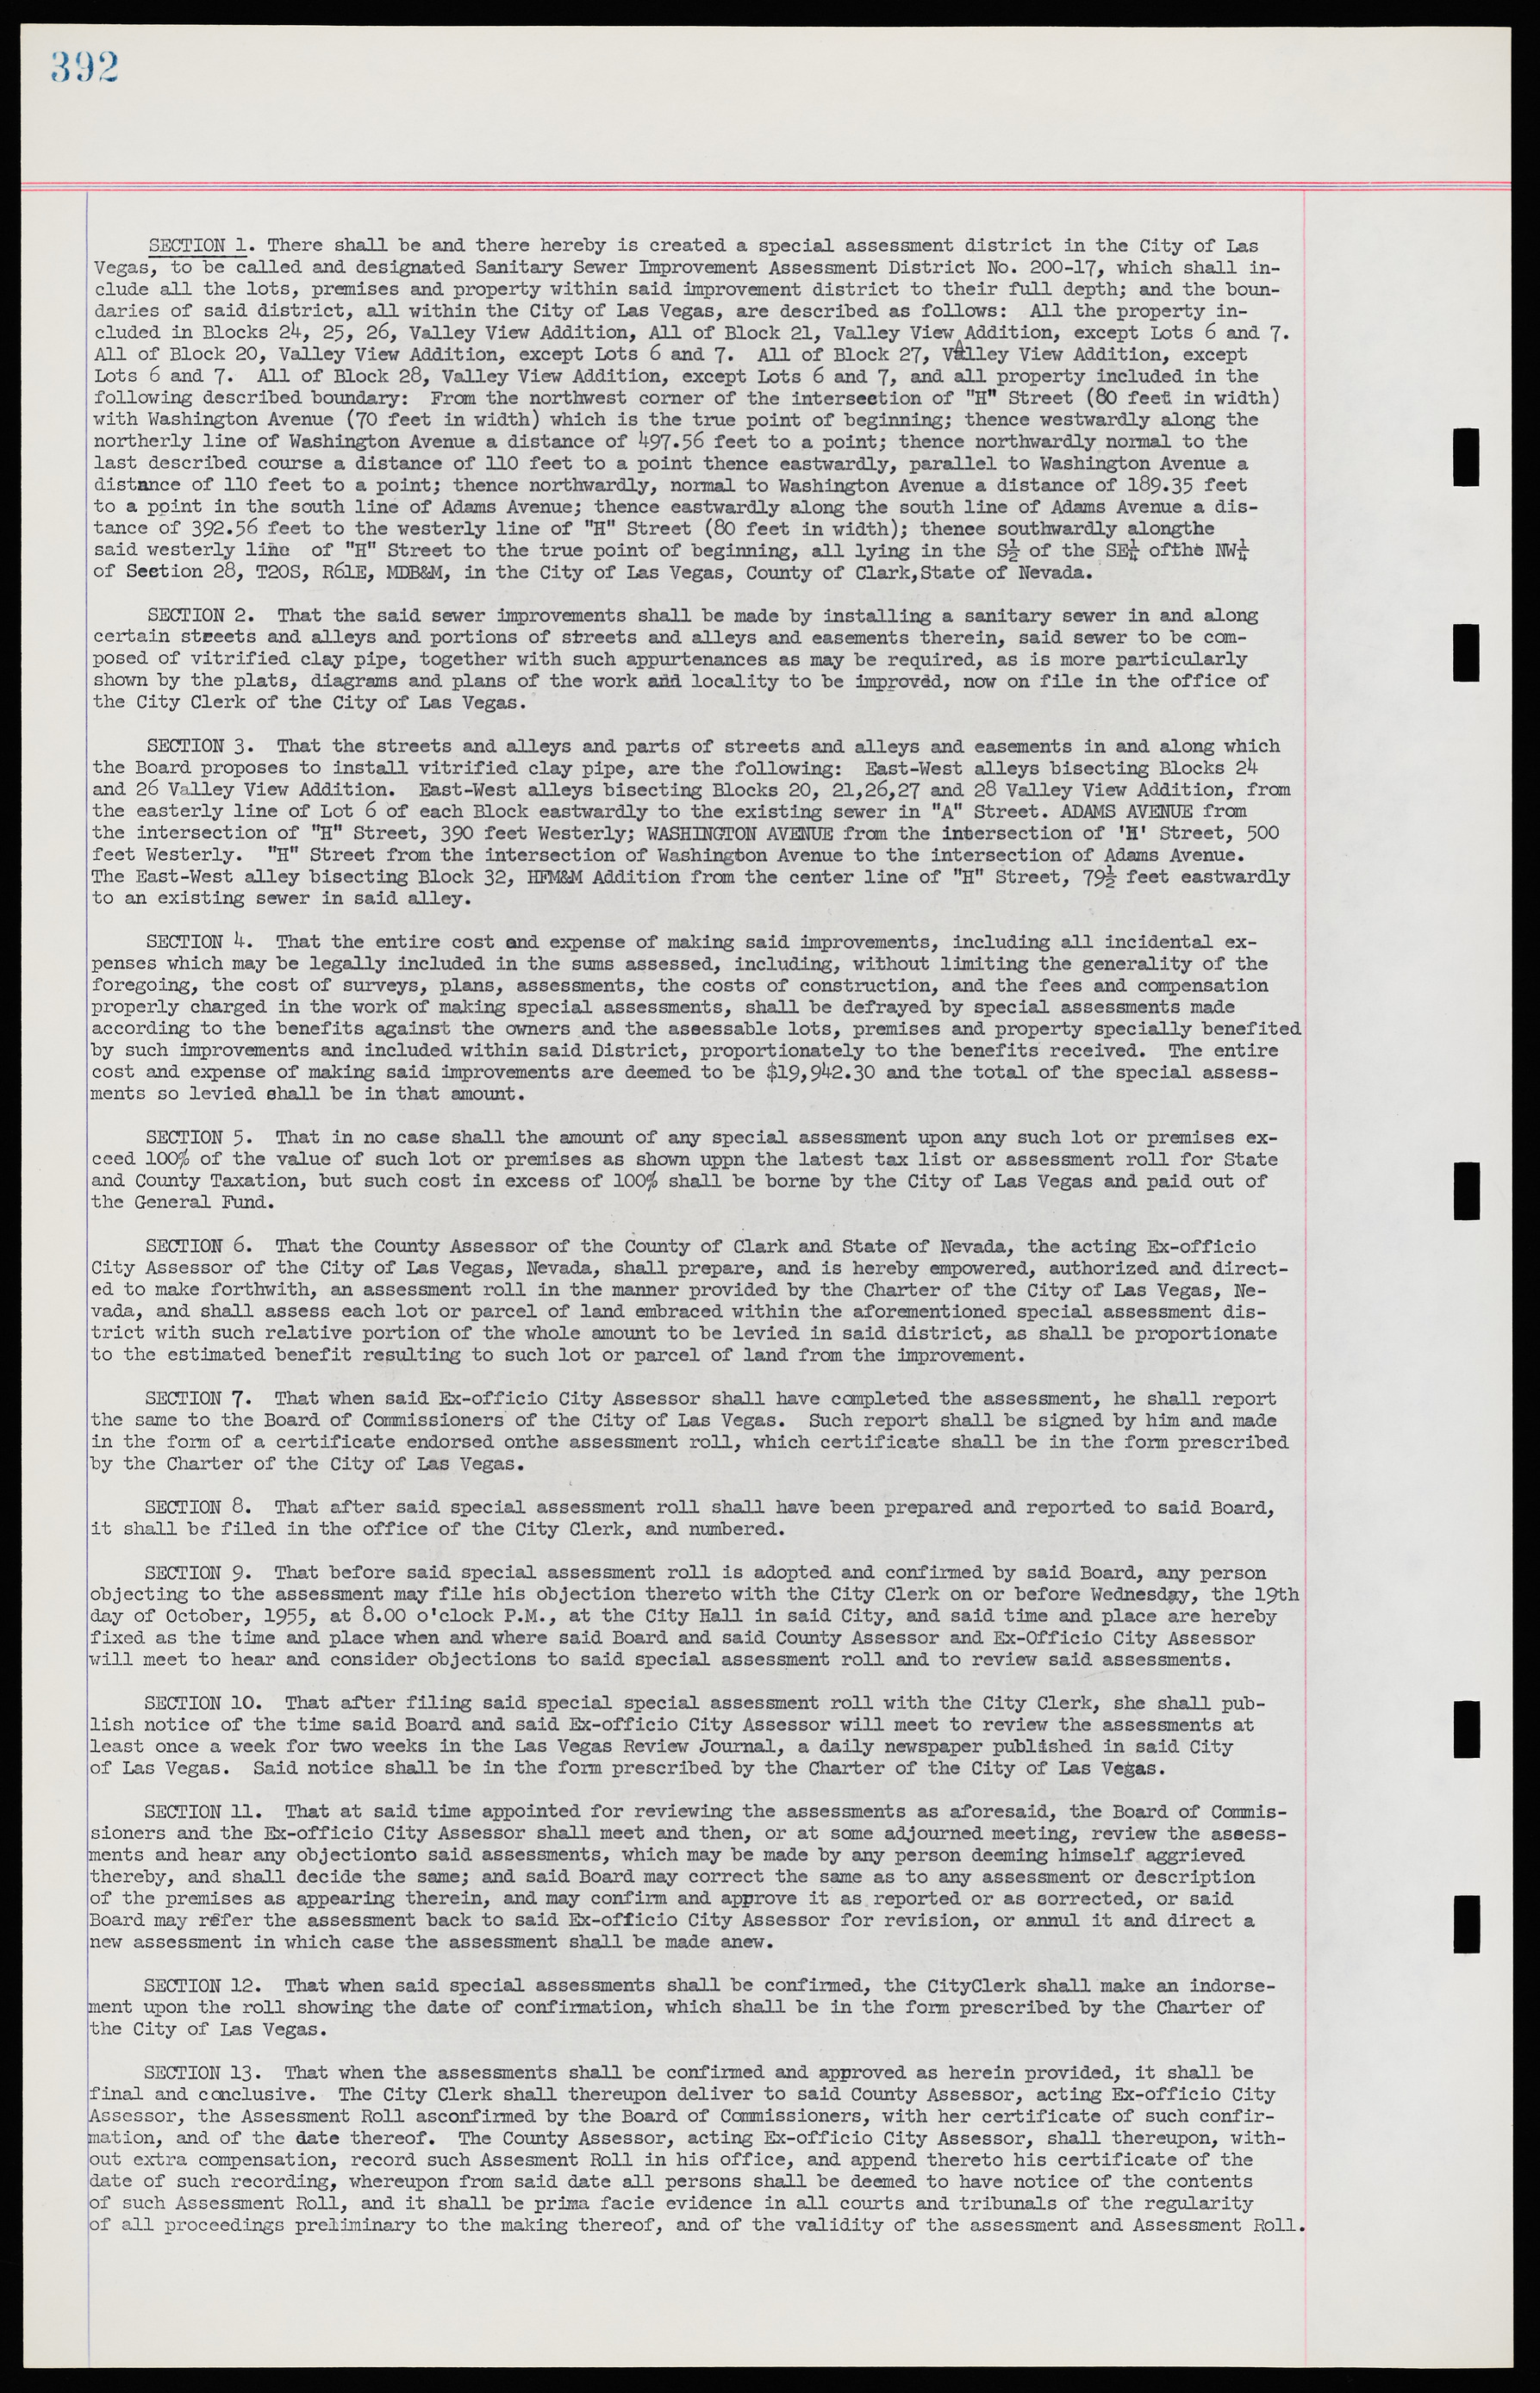 Las Vegas City Ordinances, November 13, 1950 to August 6, 1958, lvc000015-400